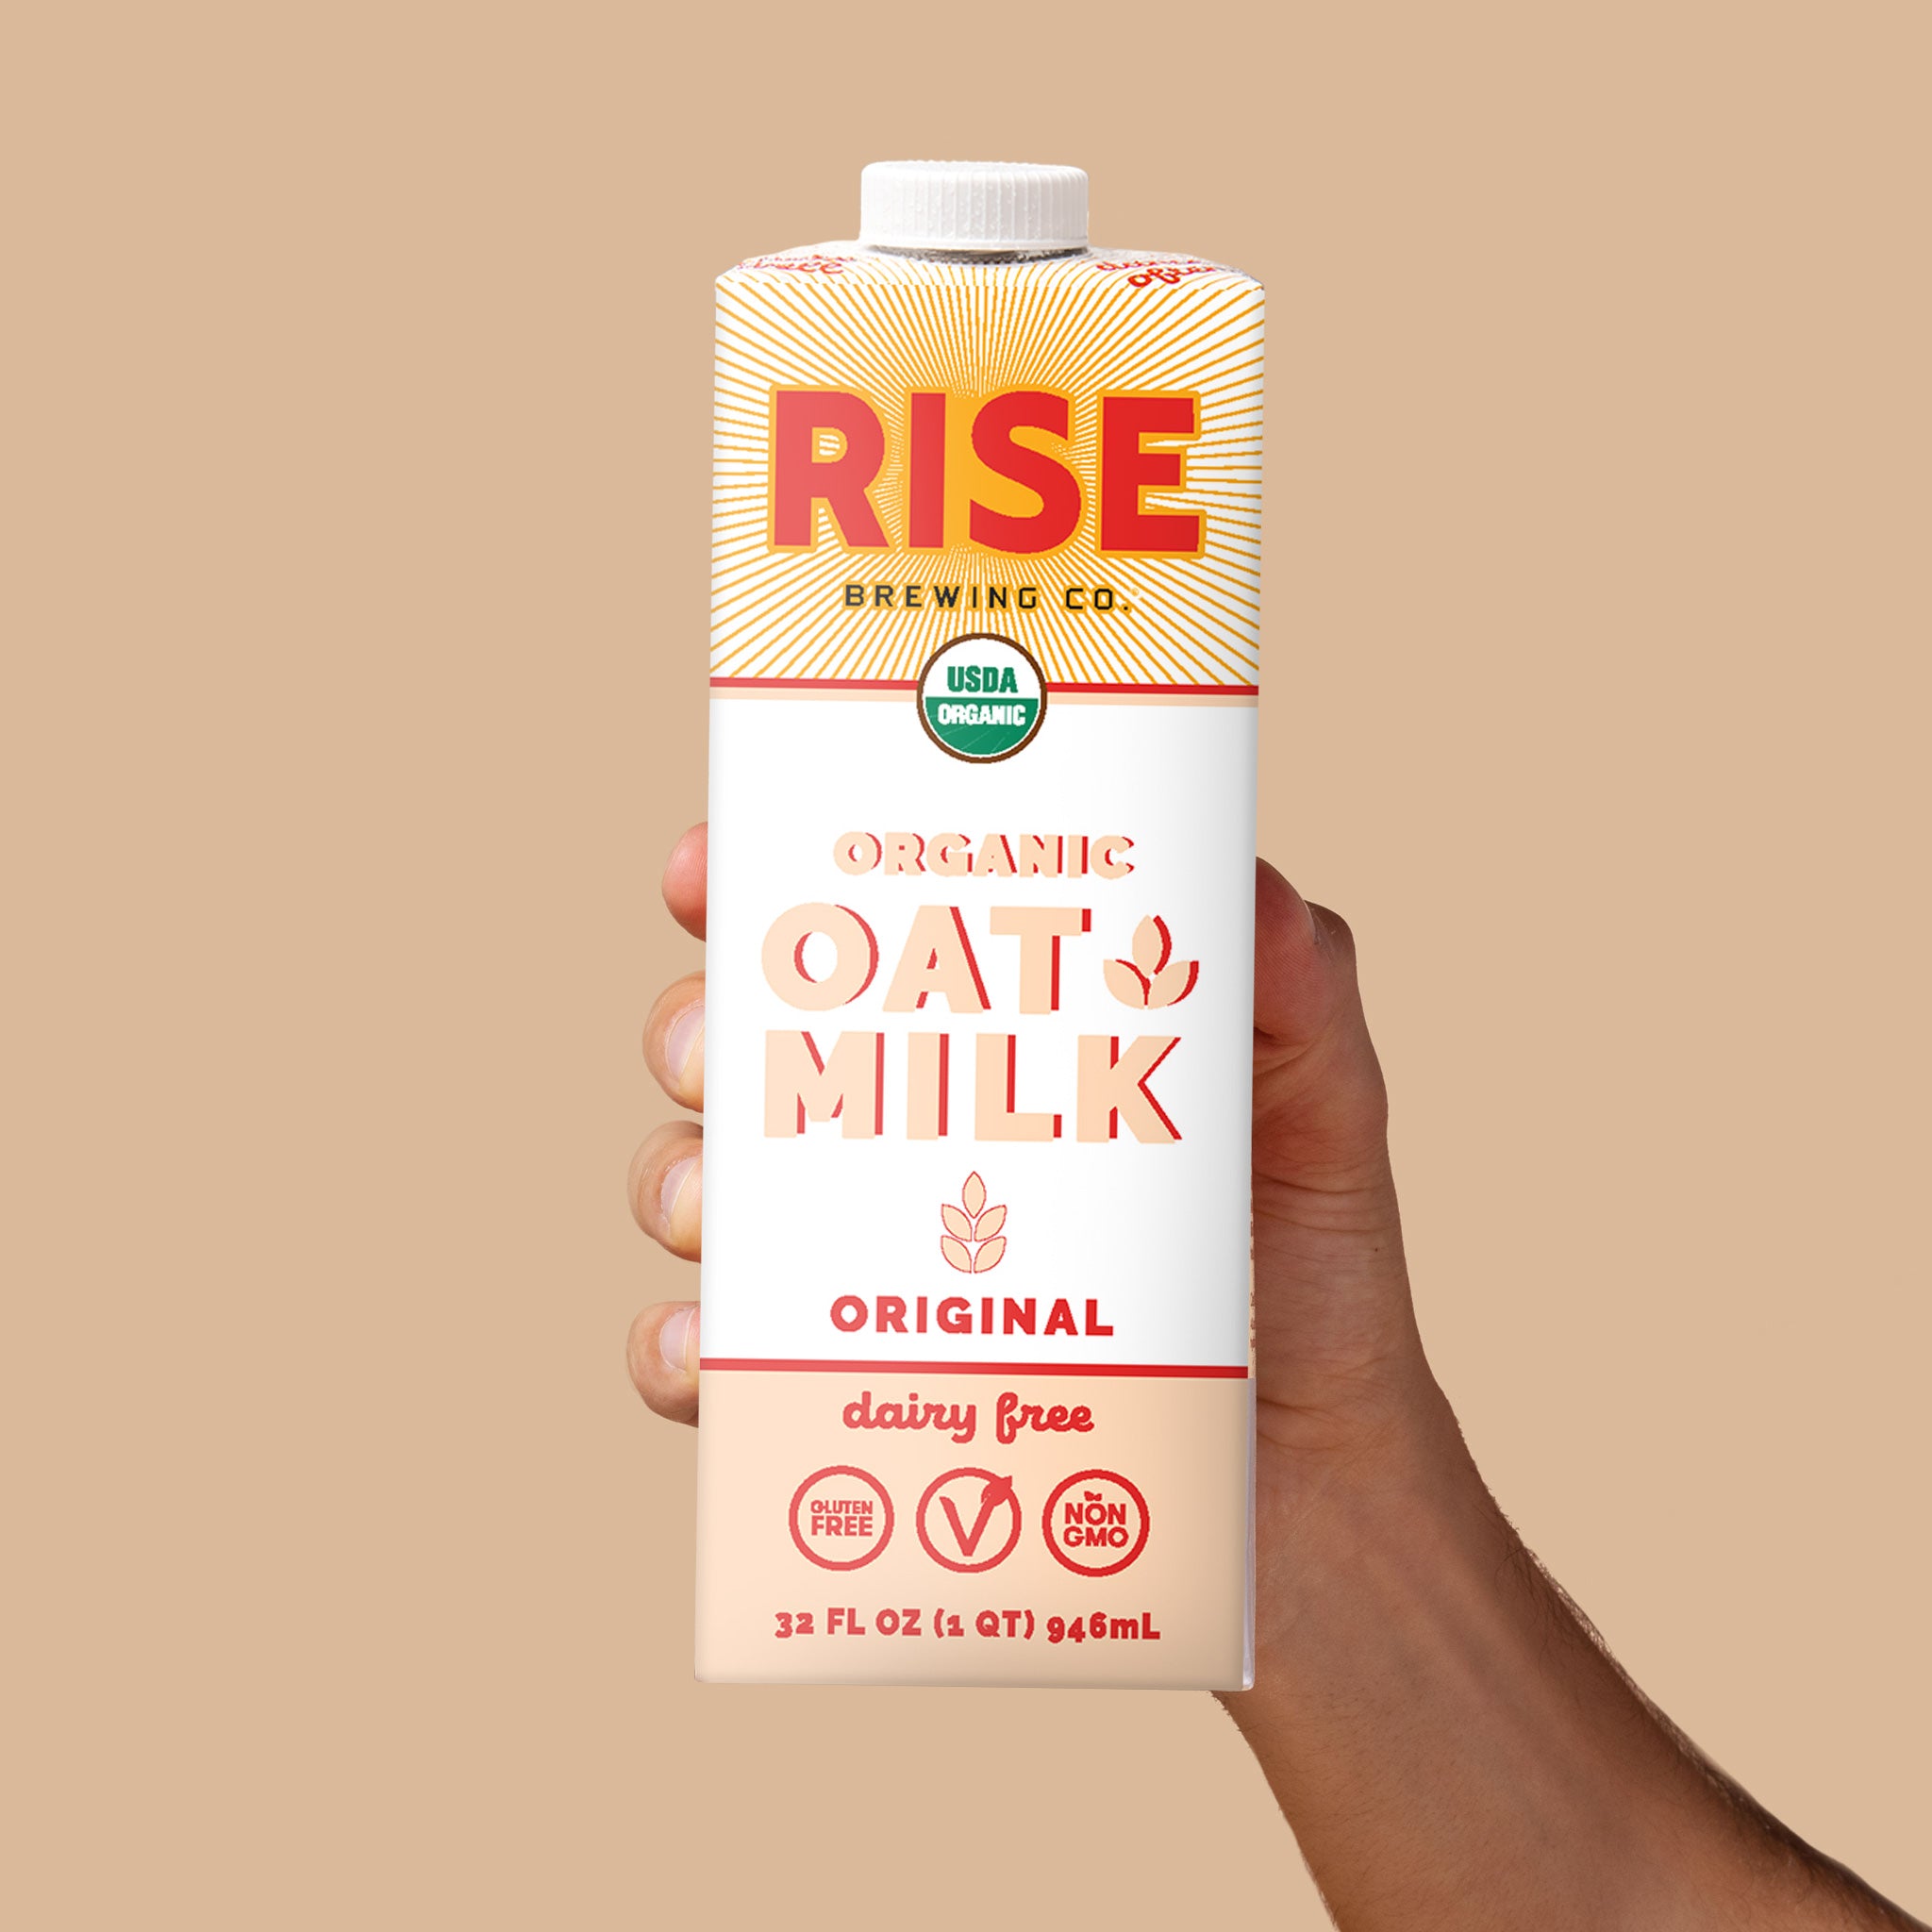 Original Oat Milk